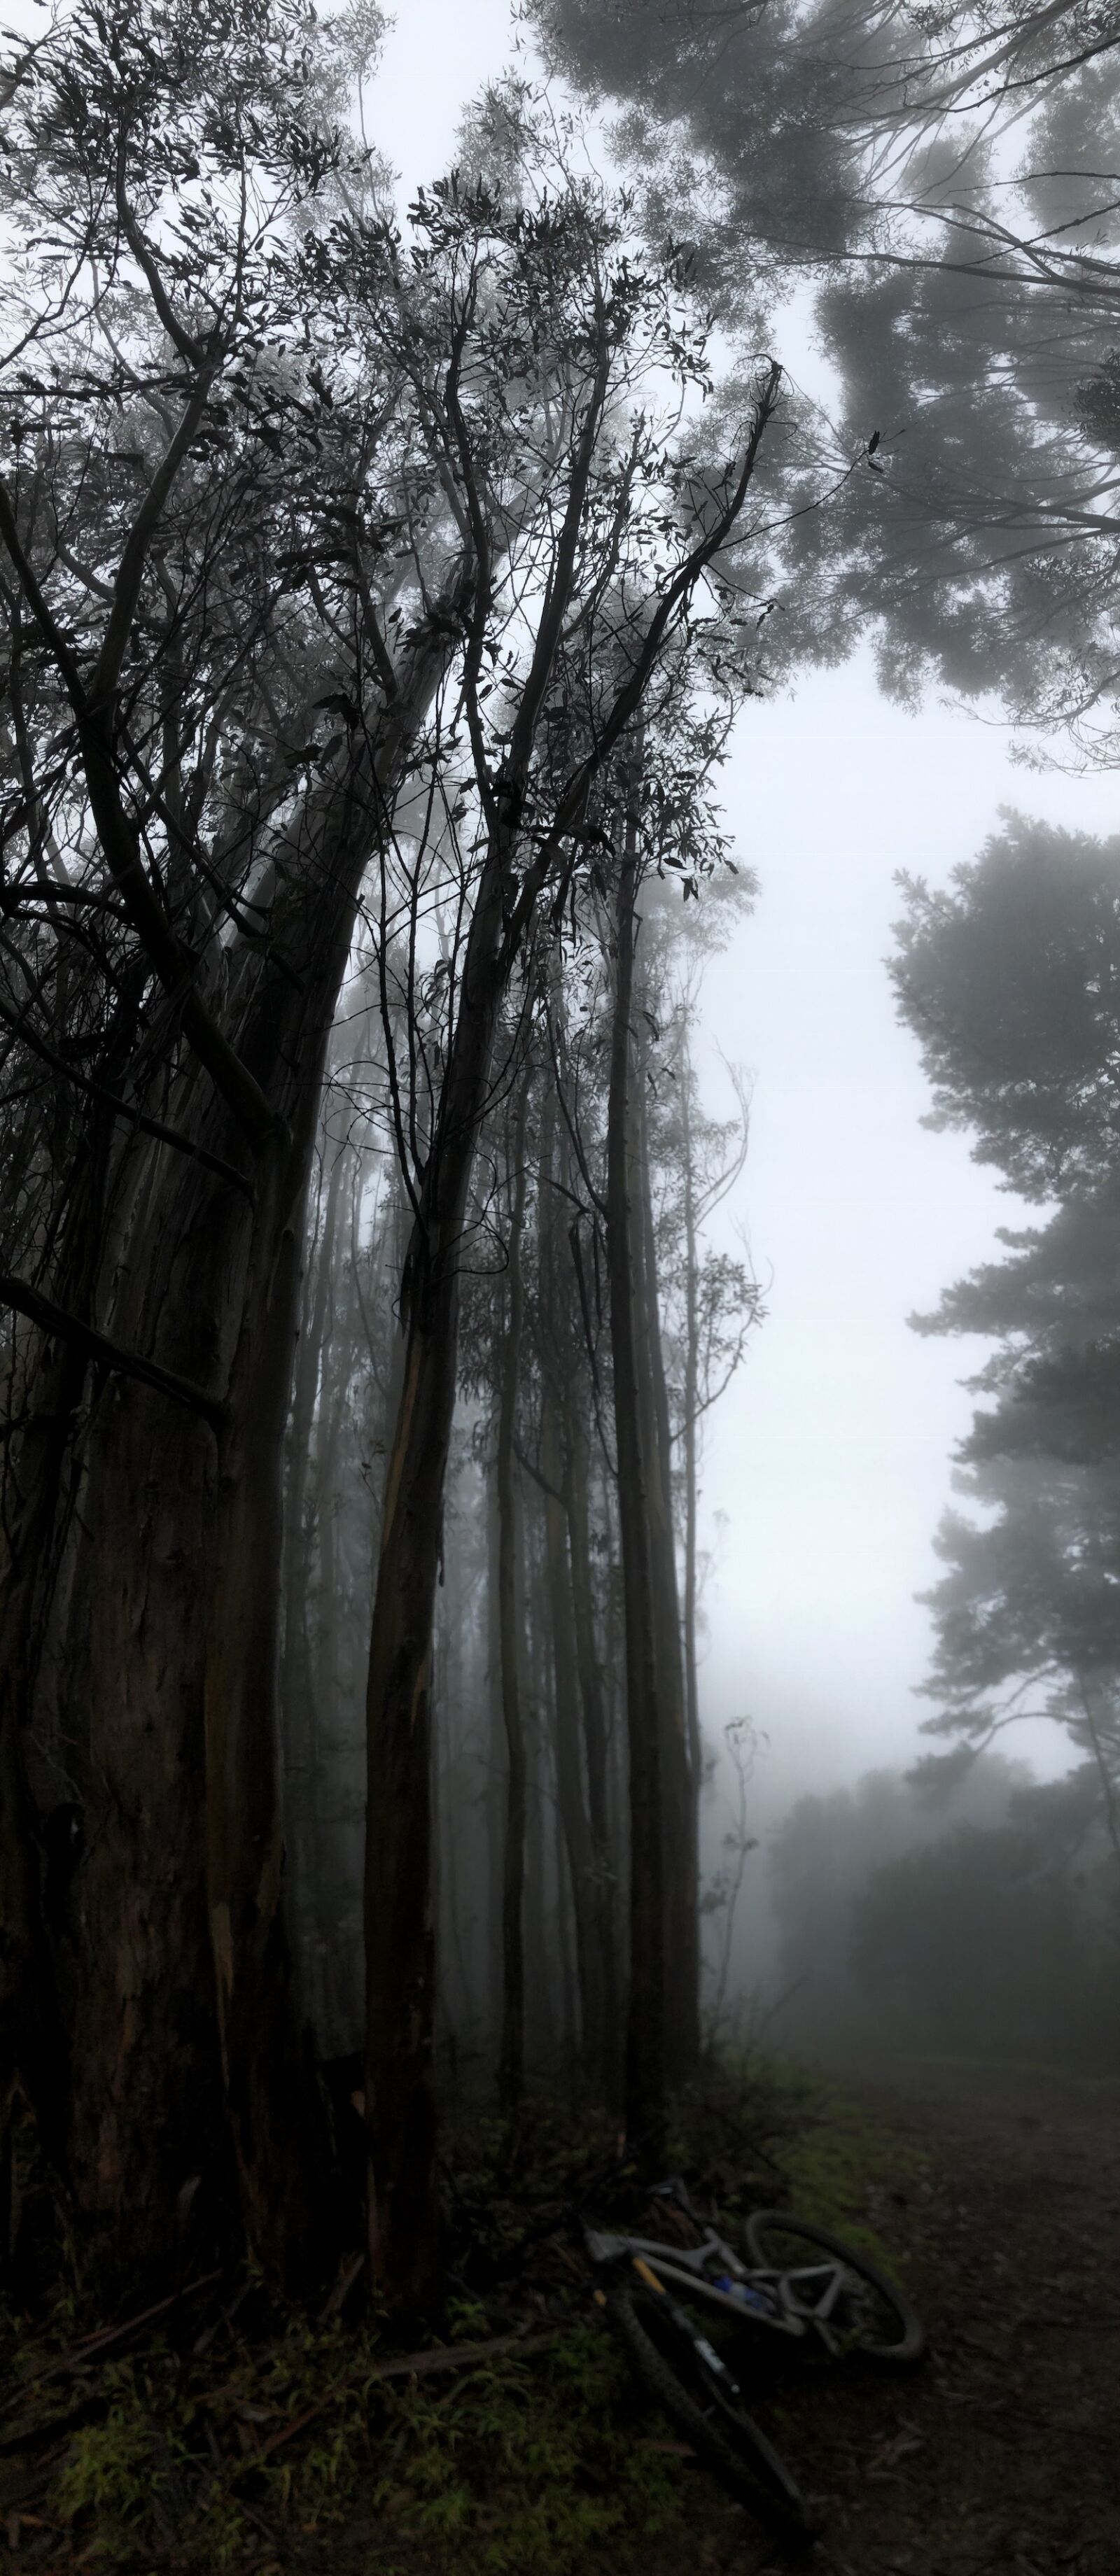 iPhone 8 Plus back camera 3.99mm f/1.8 sample photo. Redwood, mist, fog photography